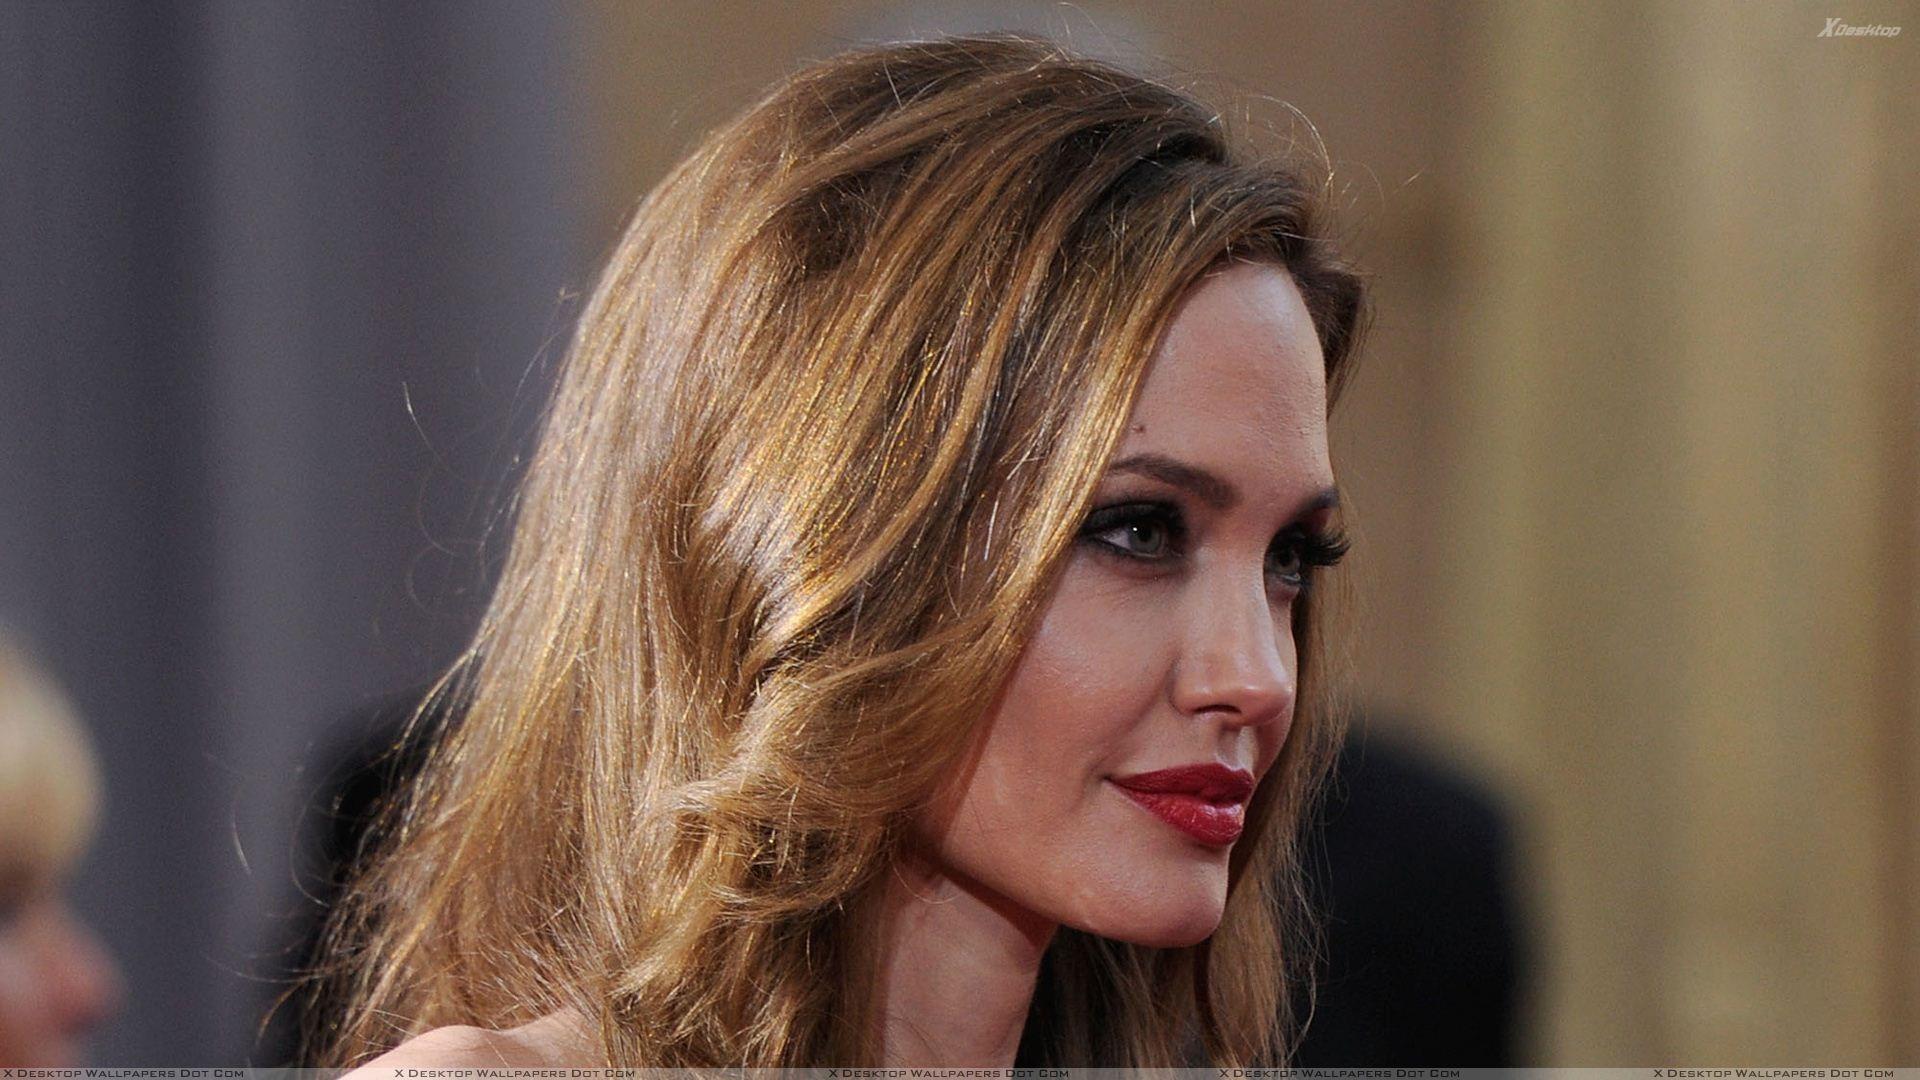 Angelina Jolie Wallpaper, Photo & Image in HD